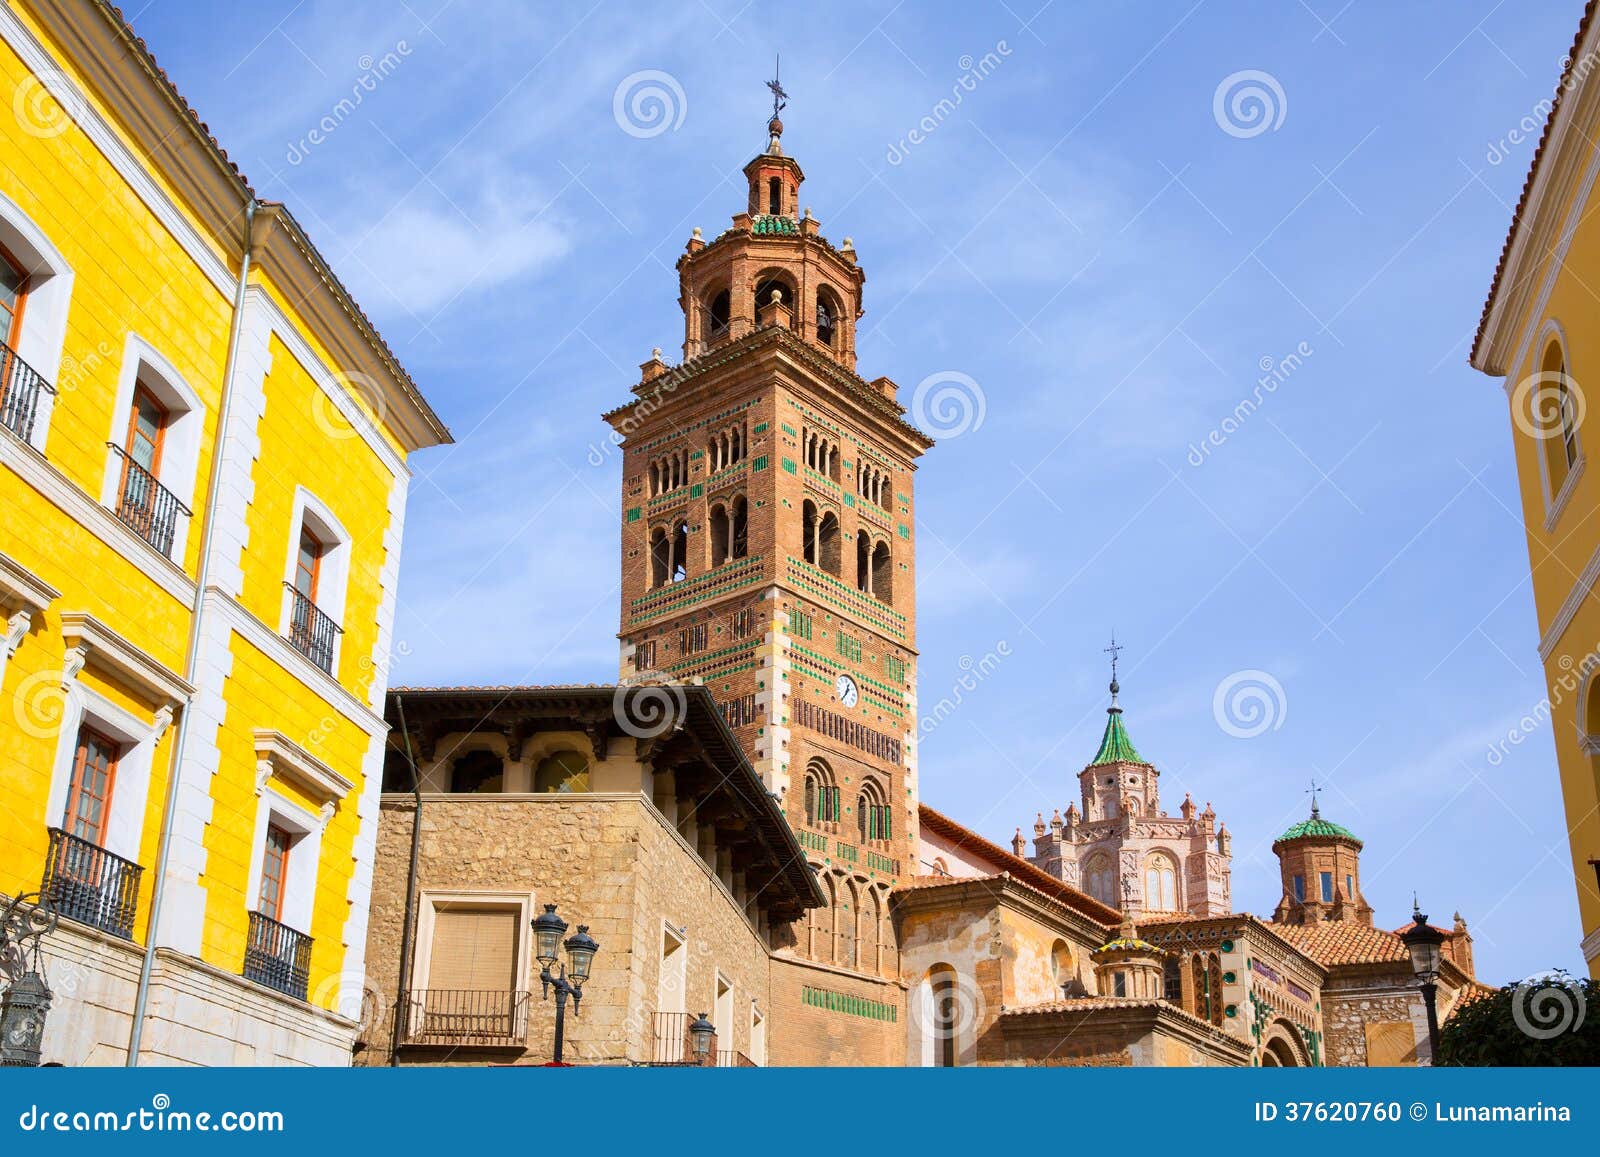 aragon teruel cathedral and ayuntamiento town hall spain